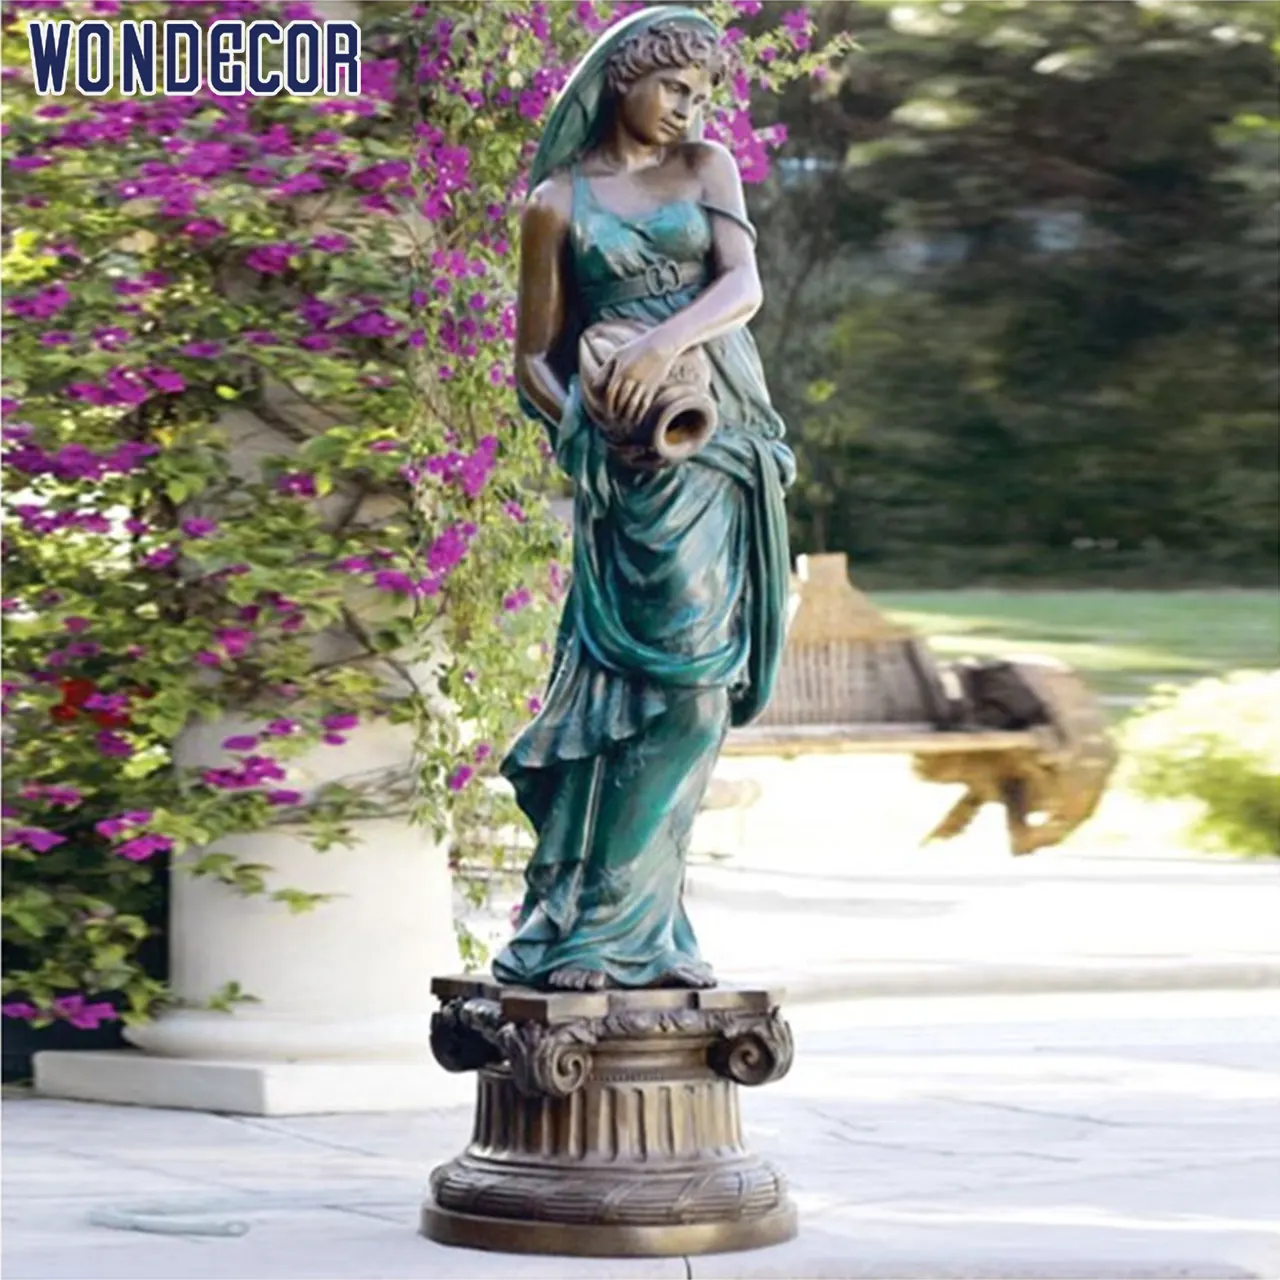 Wondecoration-estatua de Metal para exteriores, estatua de bronce de tamaño real para jardín, fuentes de agua